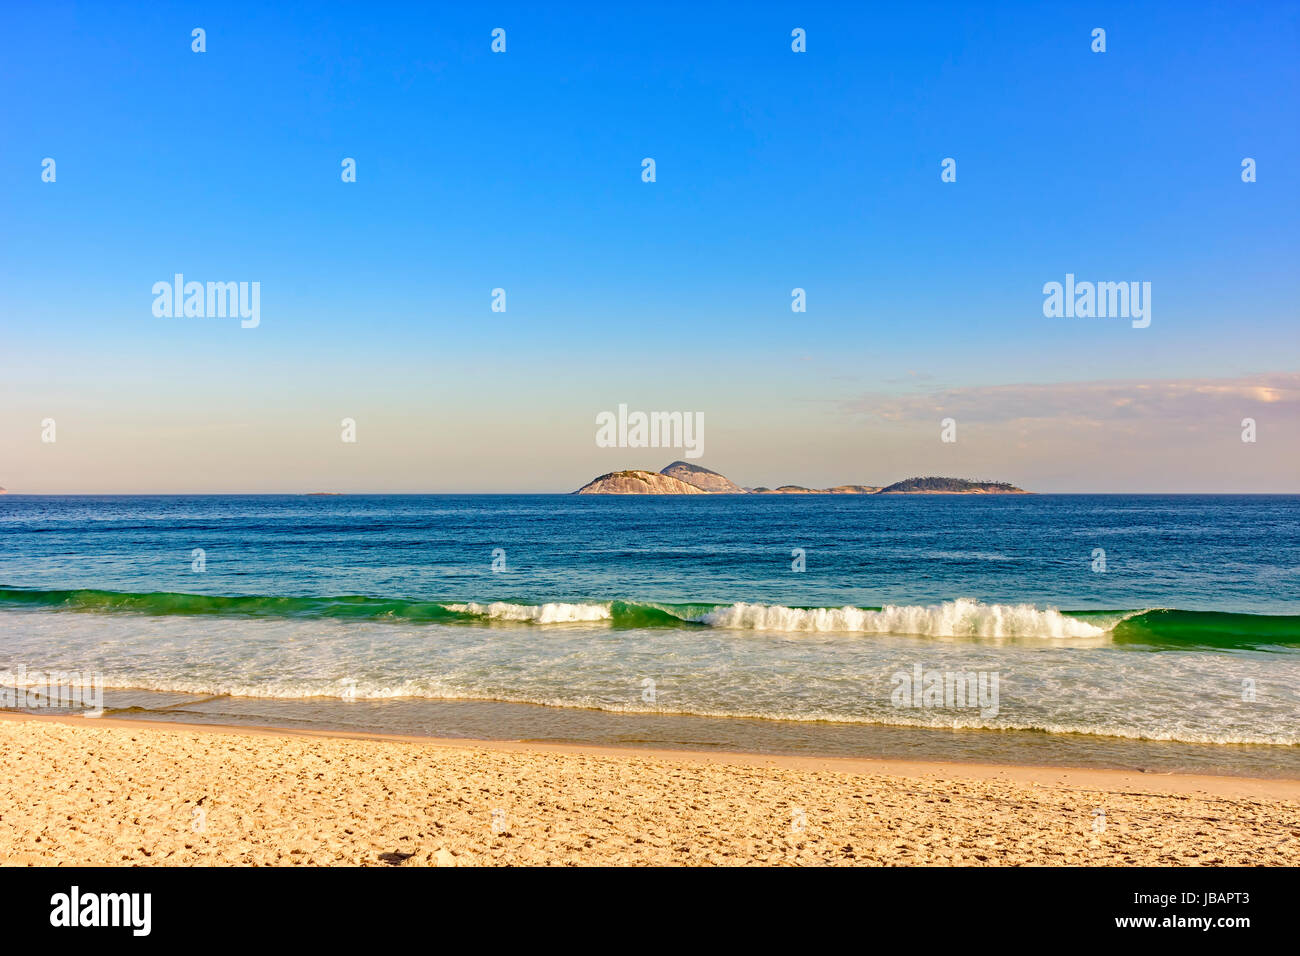 View of Cagarras islands in front off Ipanema beach in Rio de Janeiro Stock Photo